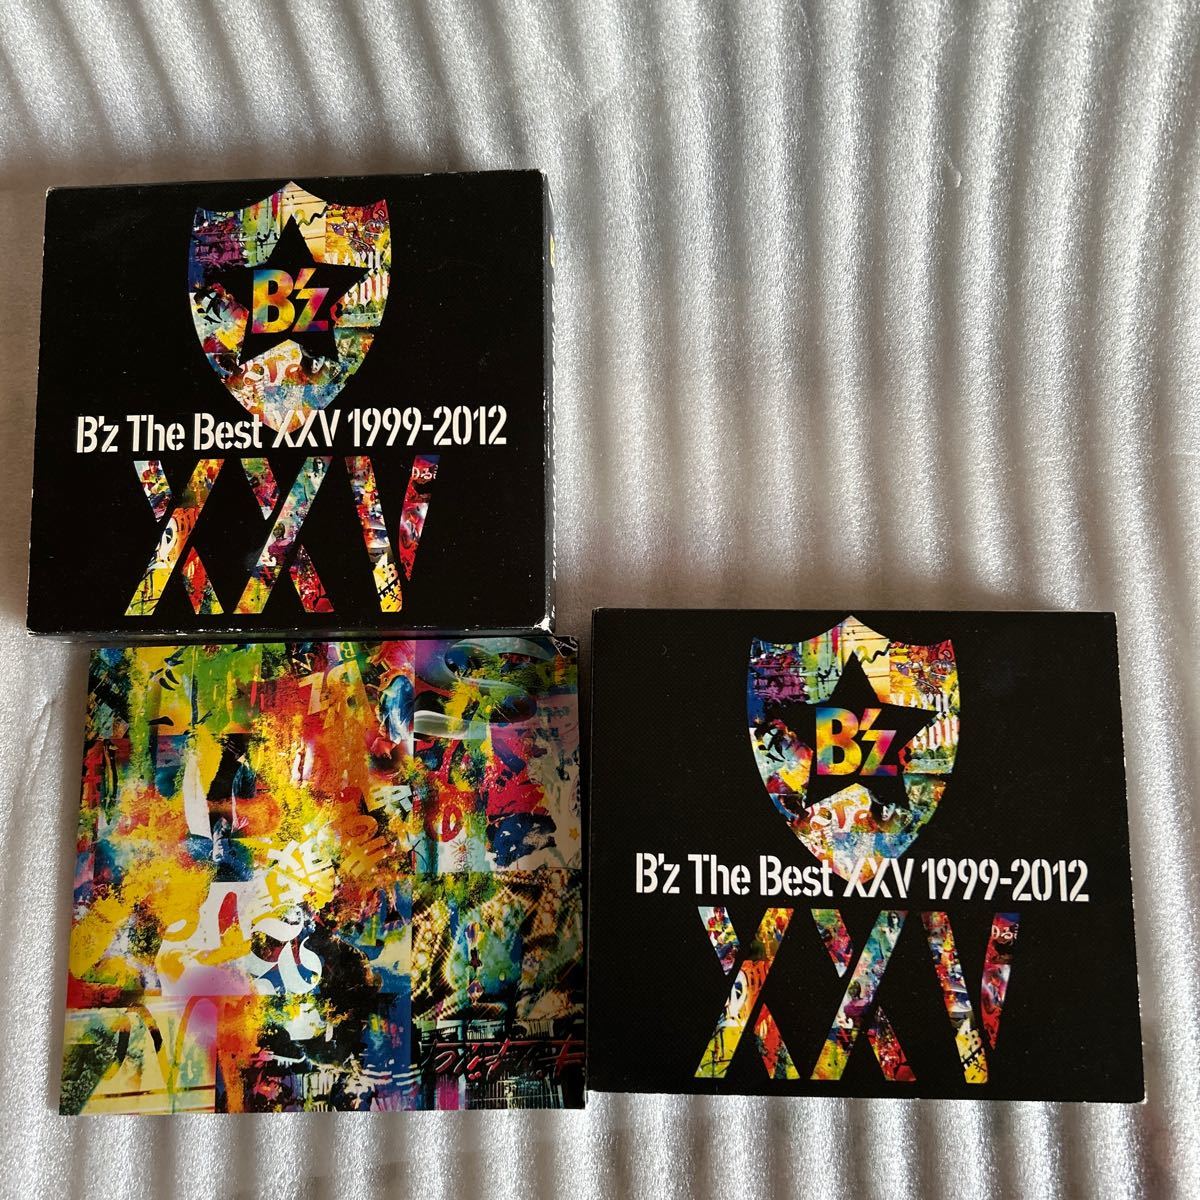 B'z B'z The Best XXV 1999-2012 CD DVD (初回限定盤) ビーズ Bz 稲葉浩志 松本孝弘_画像3